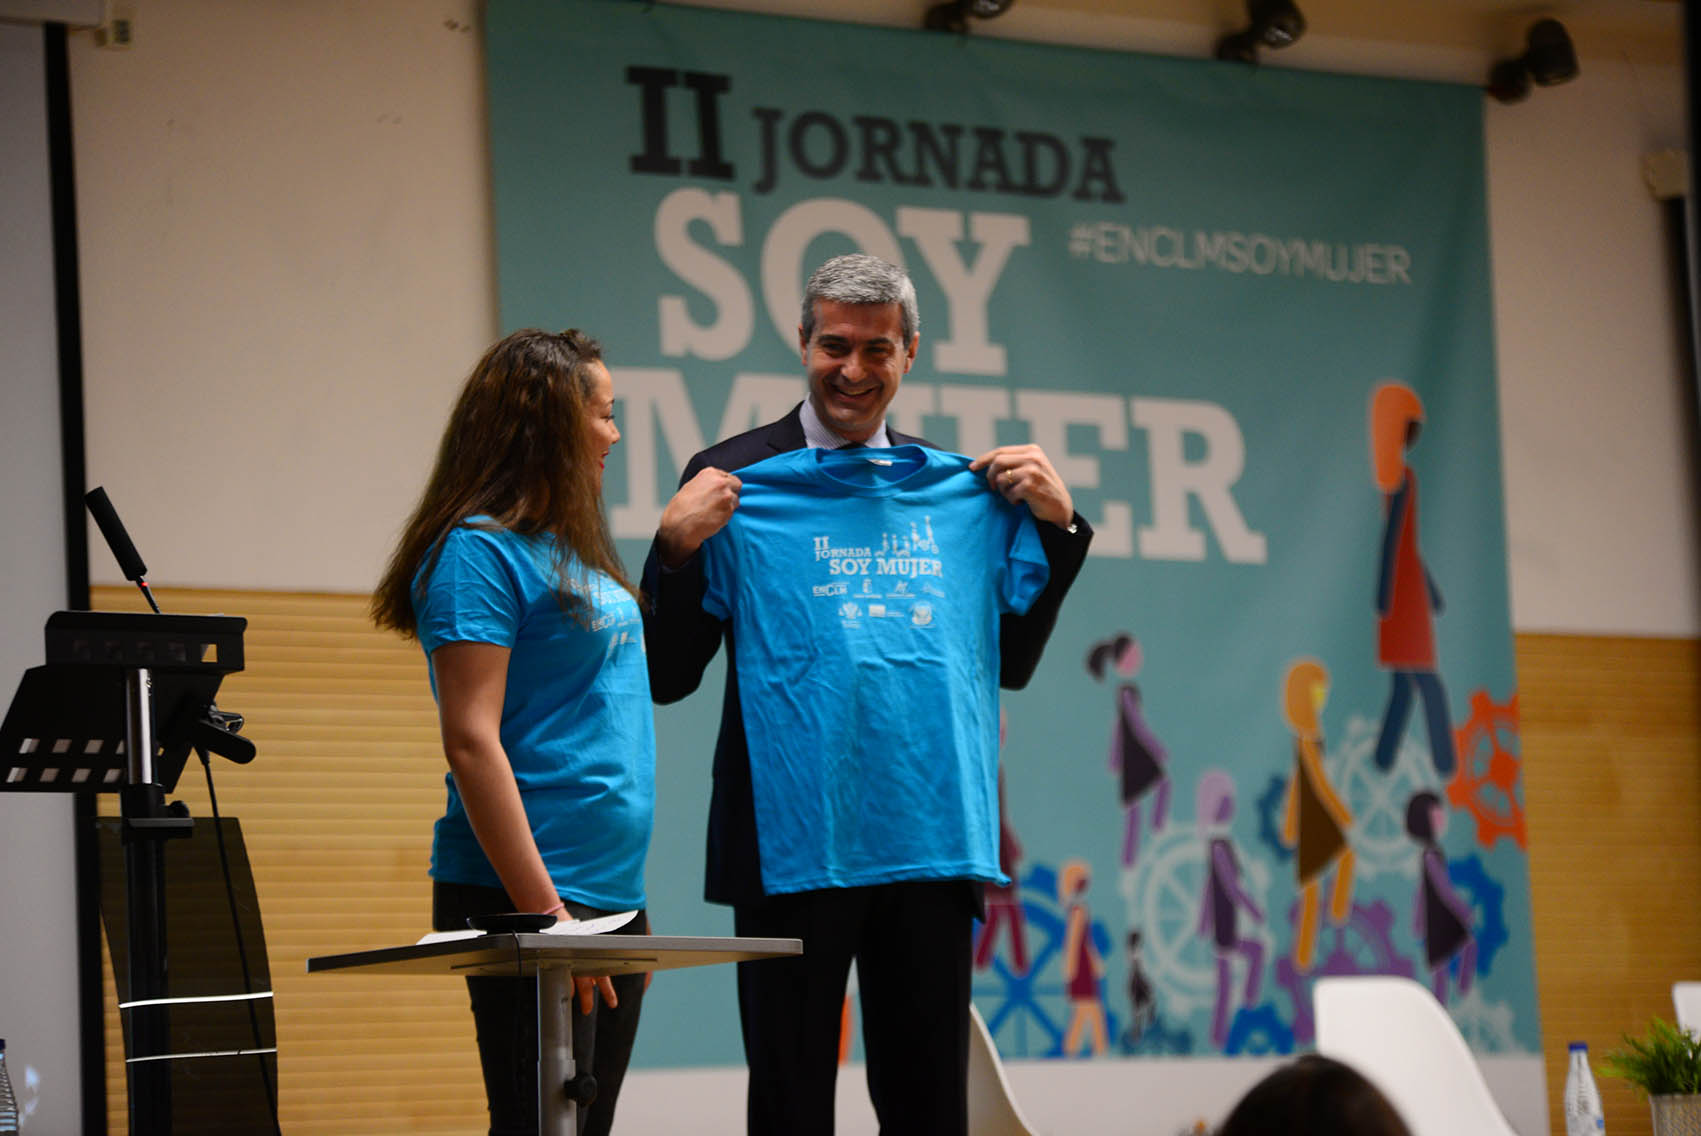 Álvaro Gutiérrez, con la camiseta conmemorativa de la II Jornada "Soy Mujer".